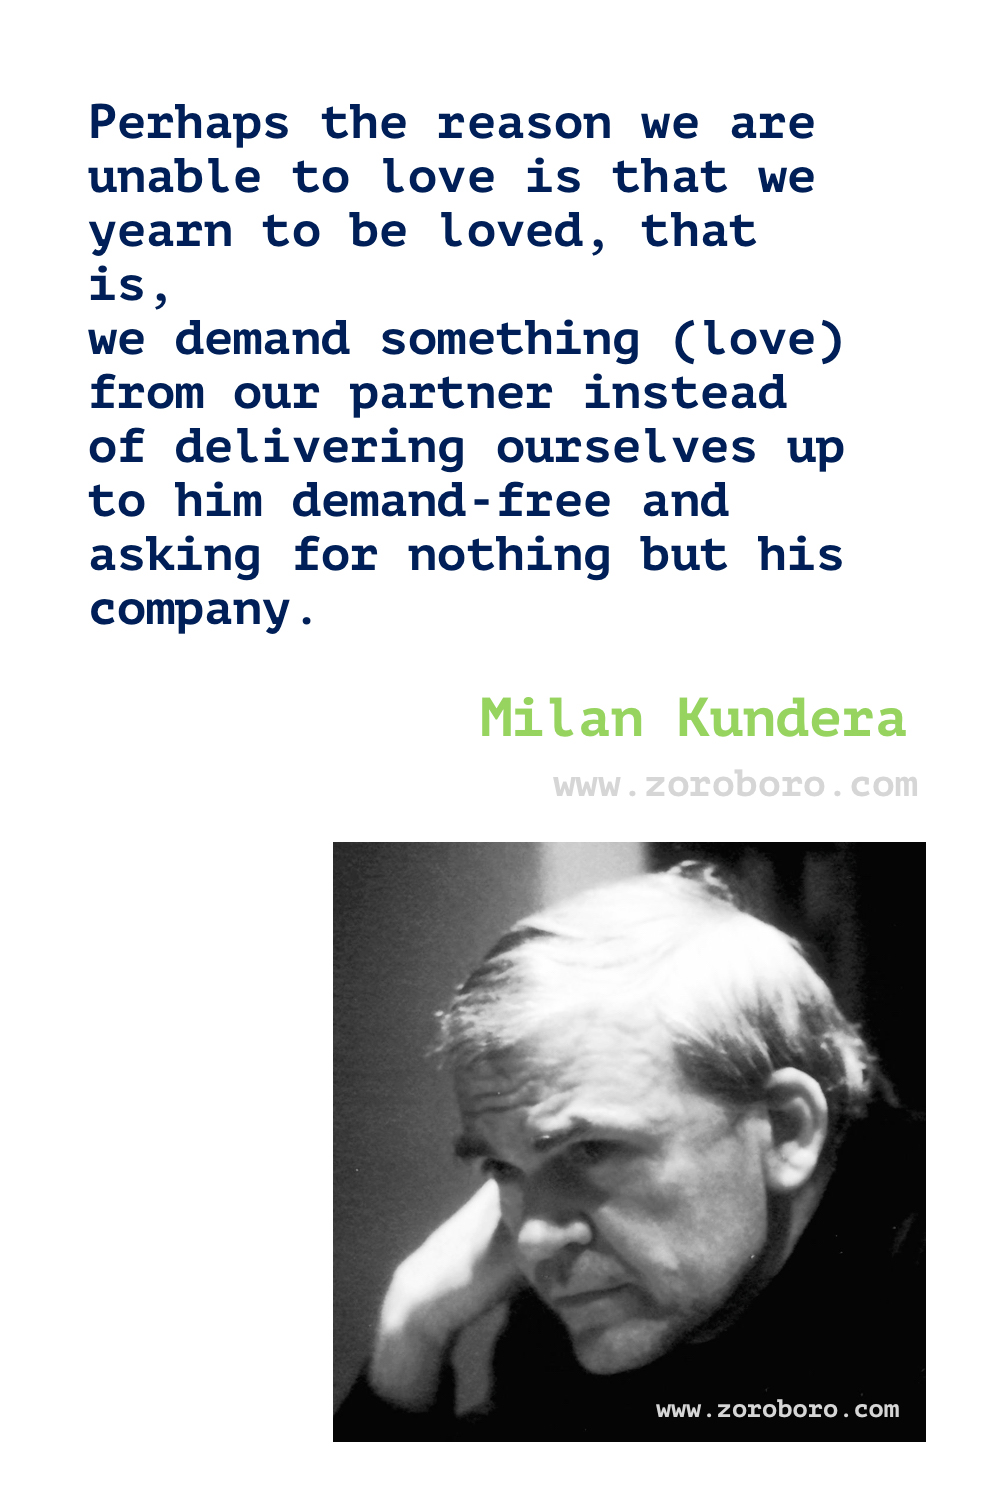 Milan Kundera Quotes. Milan Kundera books, Milan Kundera The unbearable lightness of being Quotes, Milan Kundera the book of laughter and forgetting Quotes, Milan Kundera The Joke, Slowness, immortality Quotes. Milan Kundera Books Quotes. Milan Kundera